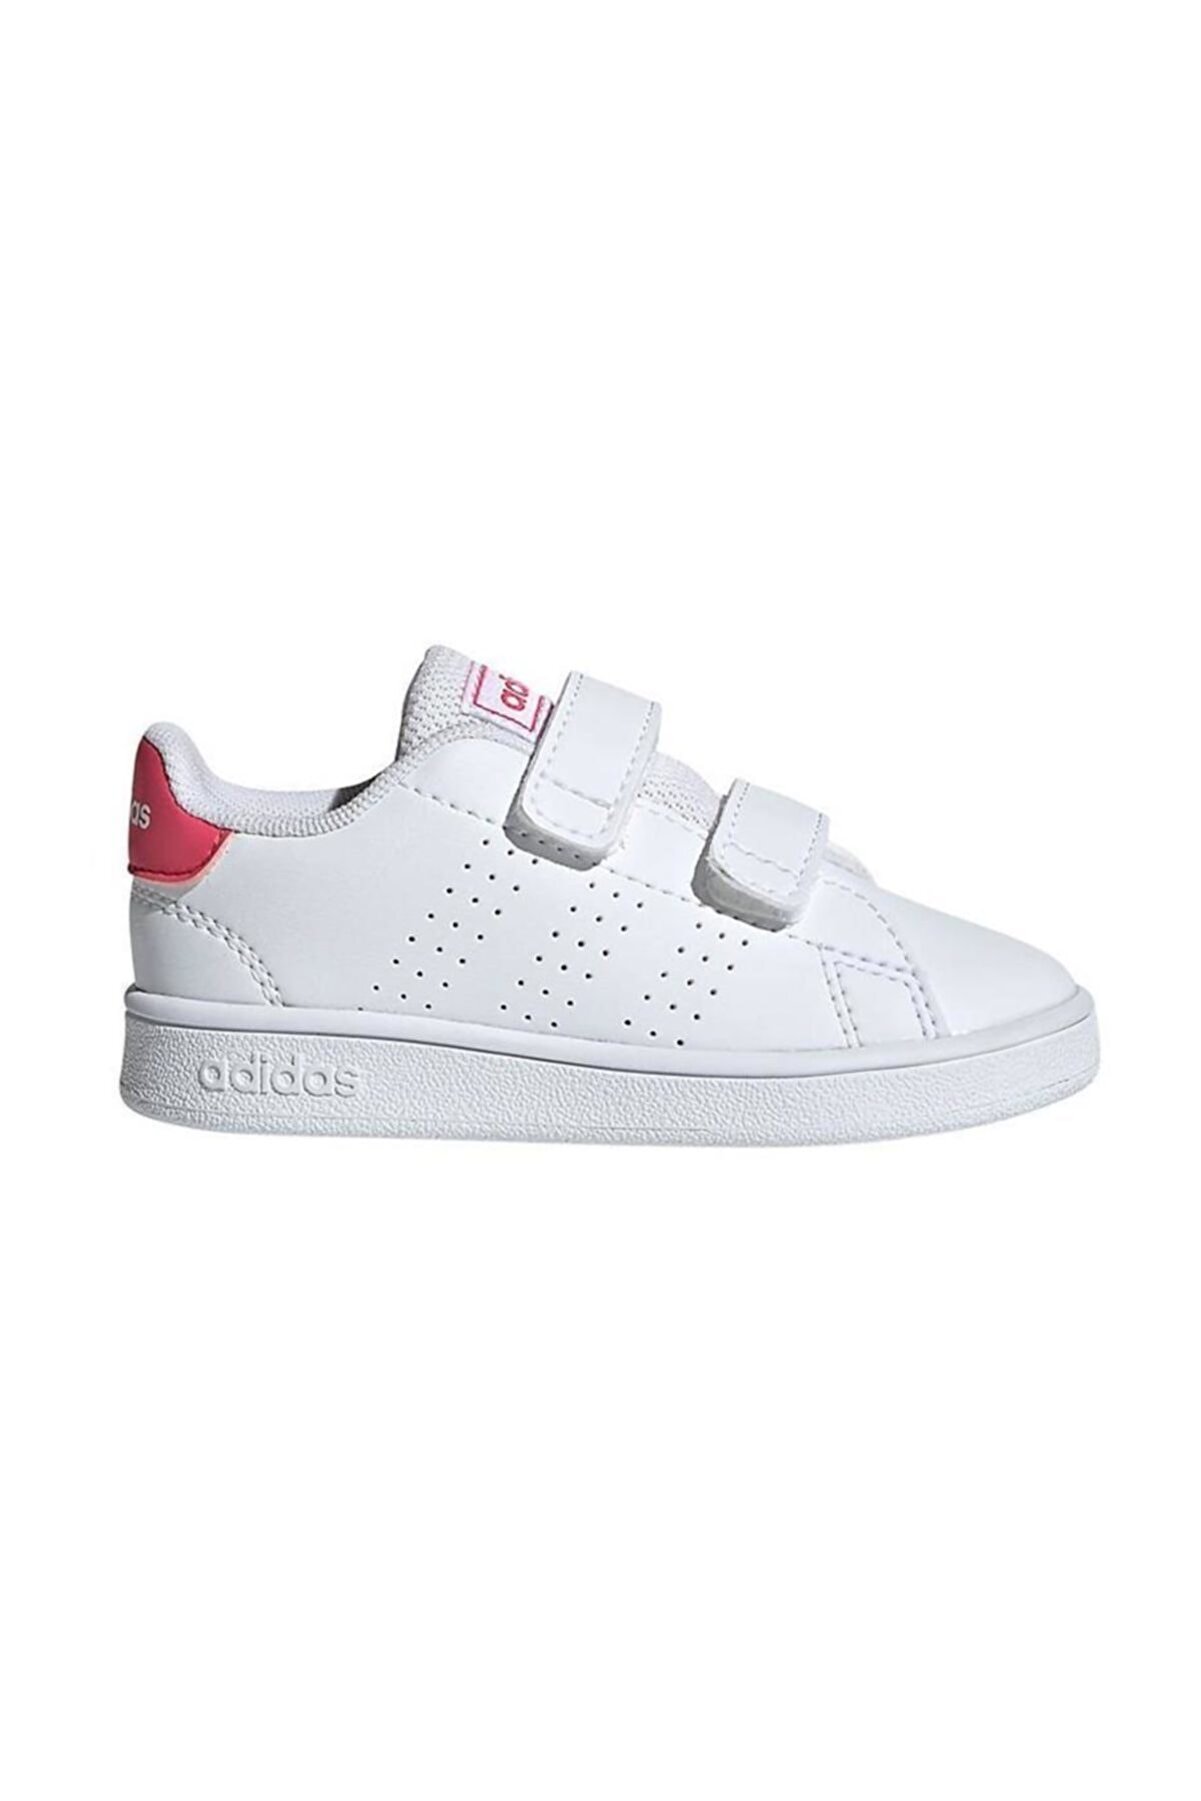 adidas ADVANTAGE Pembe Kız Çocuk Sneaker Ayakkabı 100536371